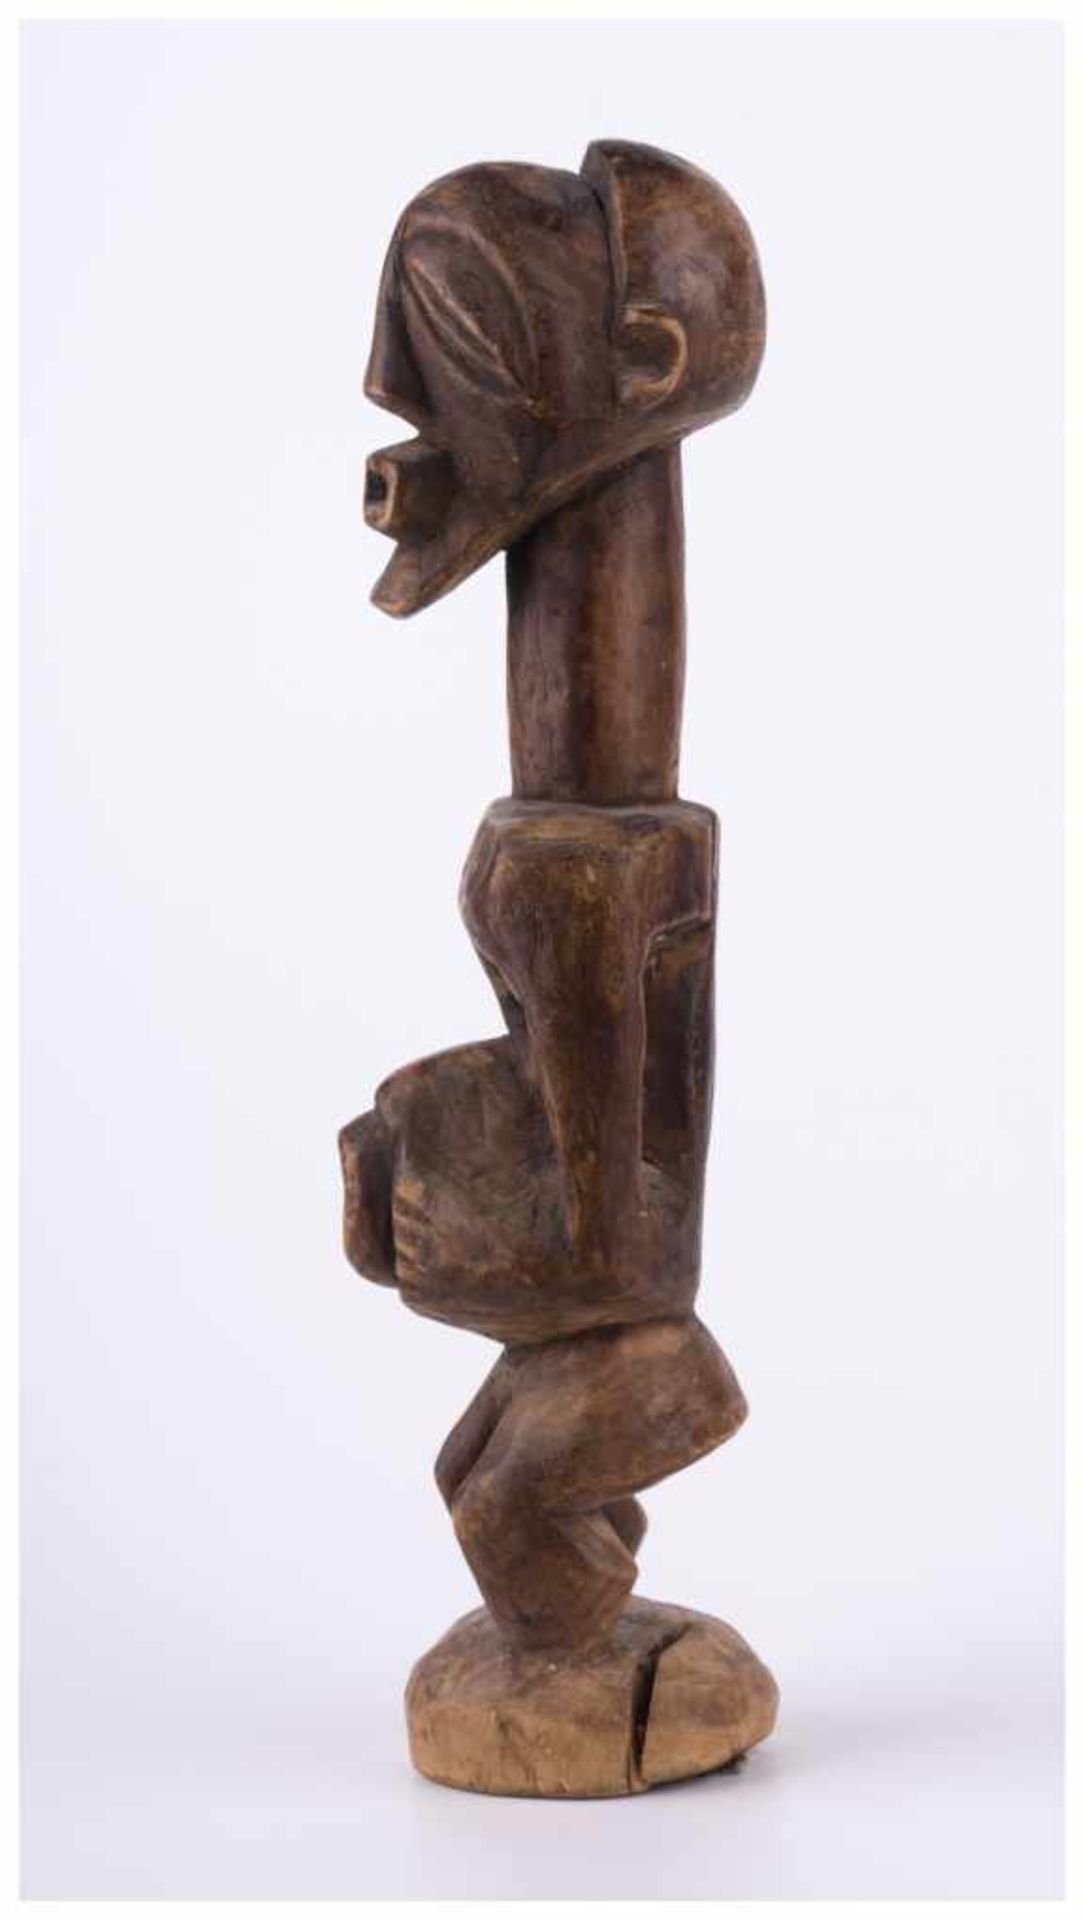 Fruchtbarkeits- Figur Afrika / Fertility figure, Africa - Holz, H: 29,5 cm - [...] - Bild 8 aus 8